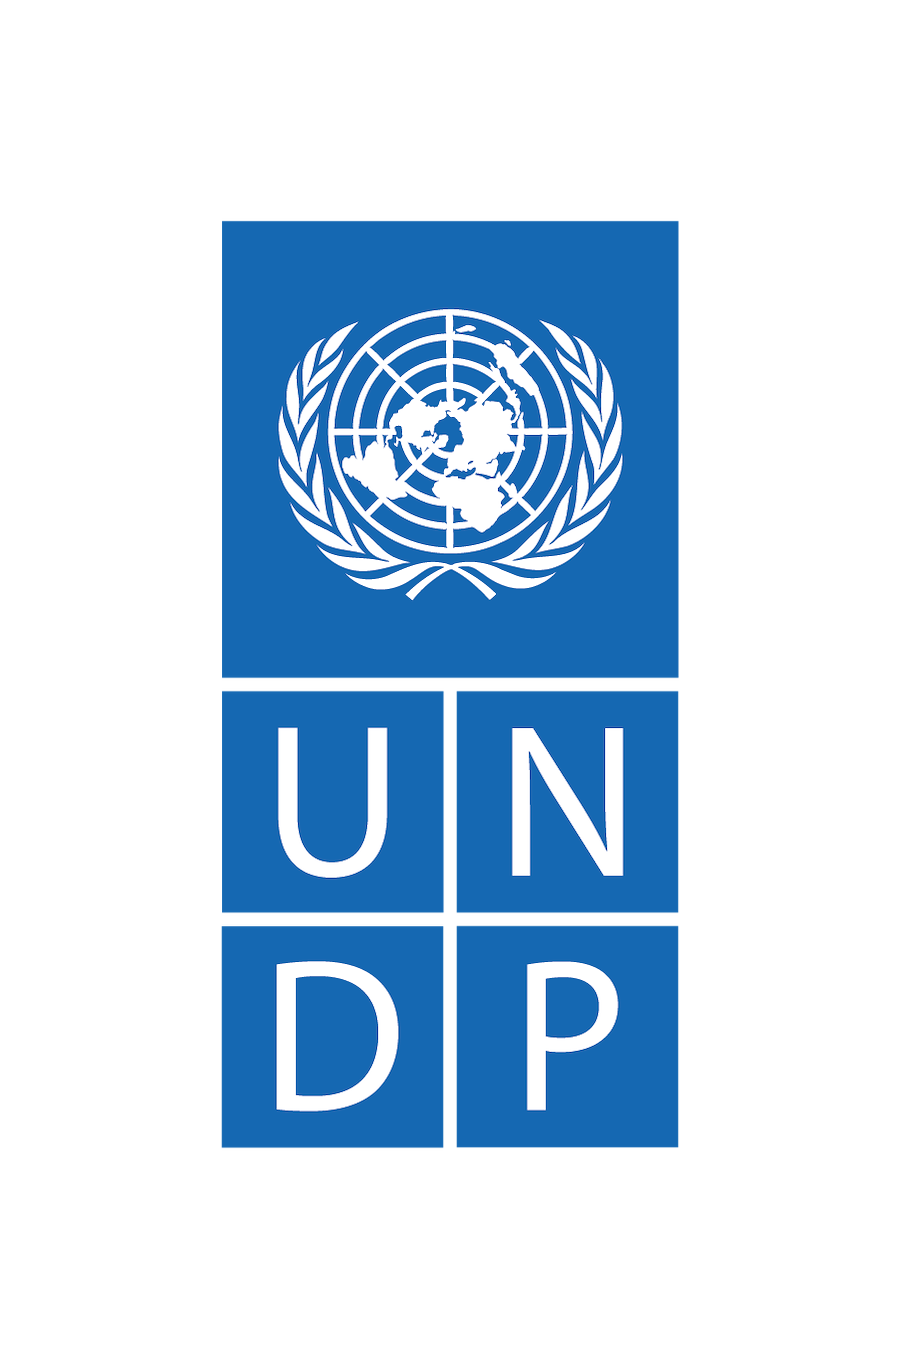 UNDP Mauritius and Seychelles